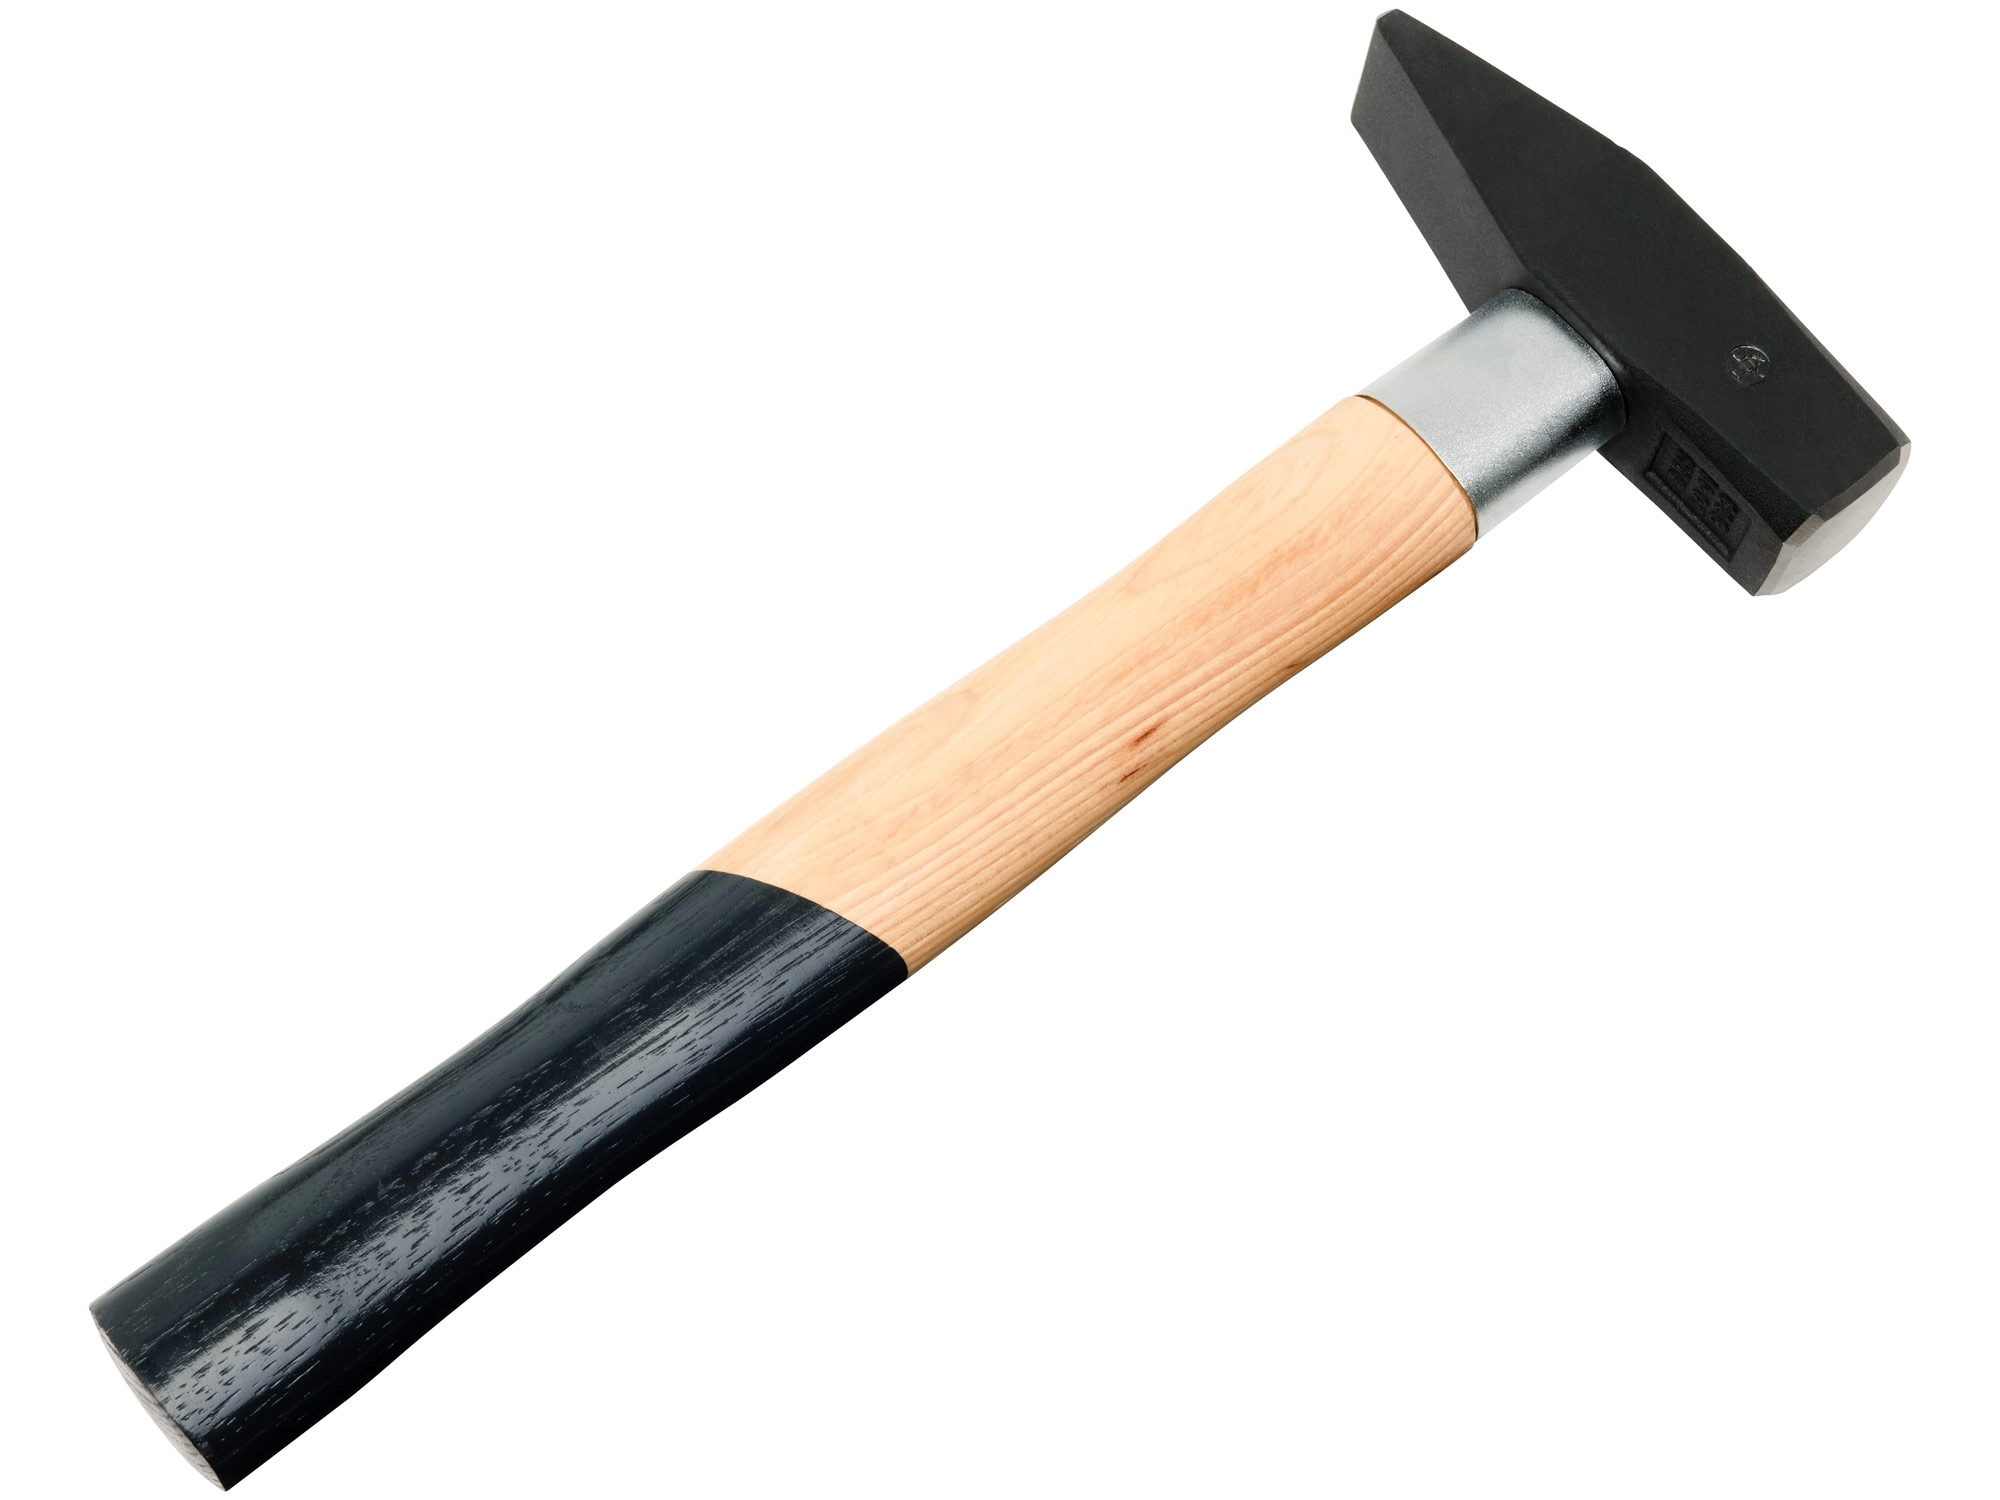 8 lb Steel Sledge Hammer with 16 wood handle